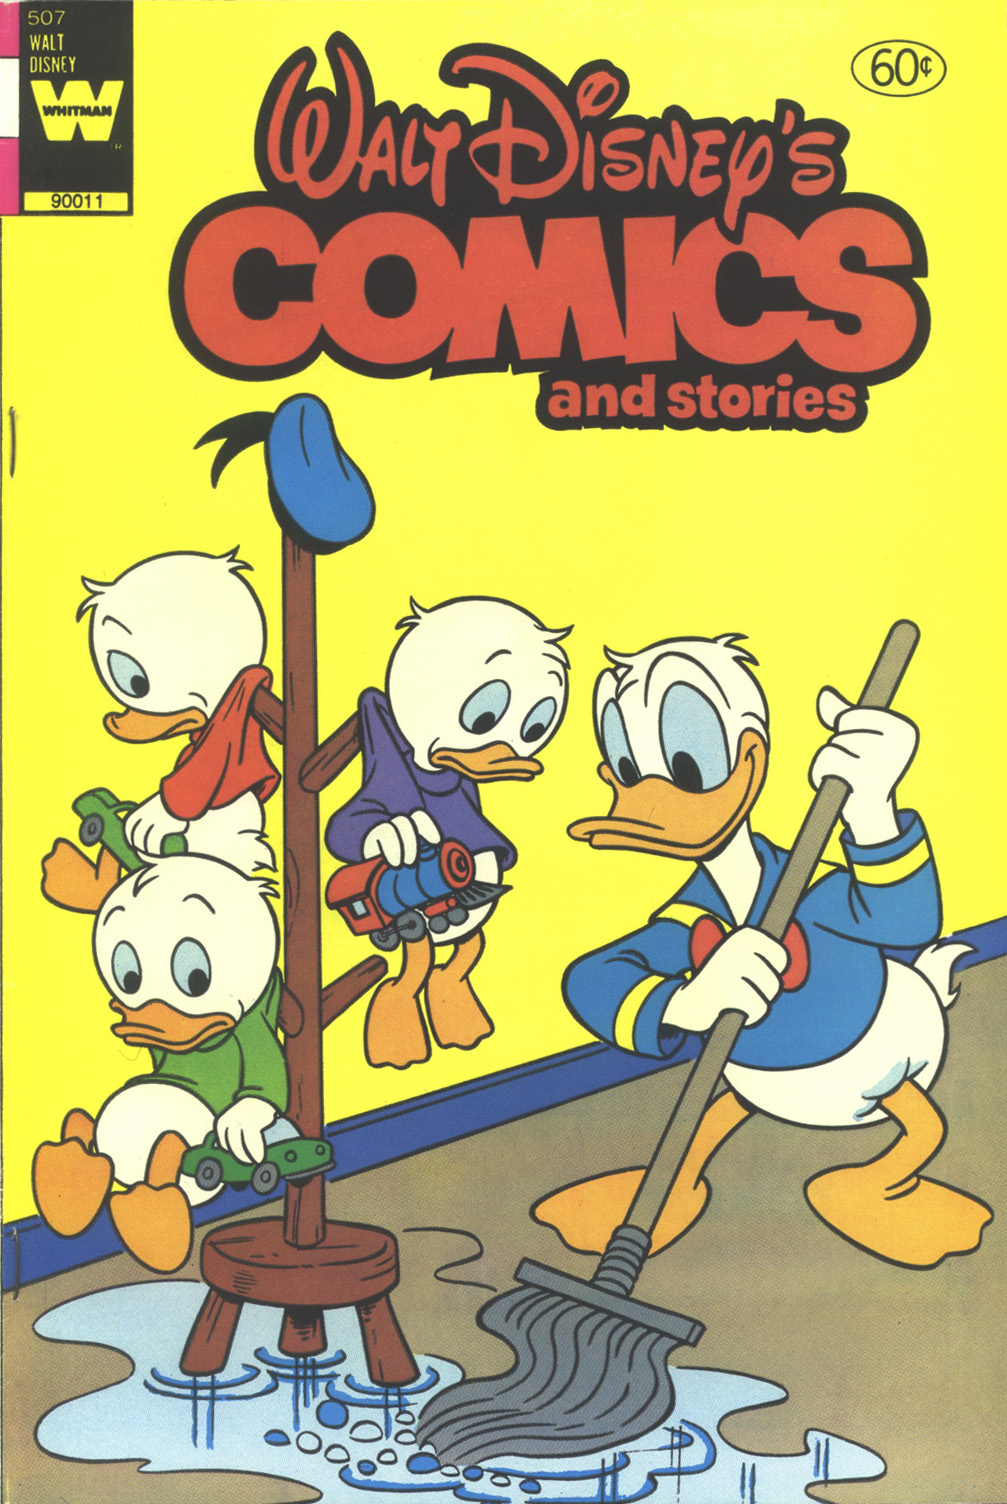 Read online Walt Disney's Comics and Stories comic -  Issue #507 - 1